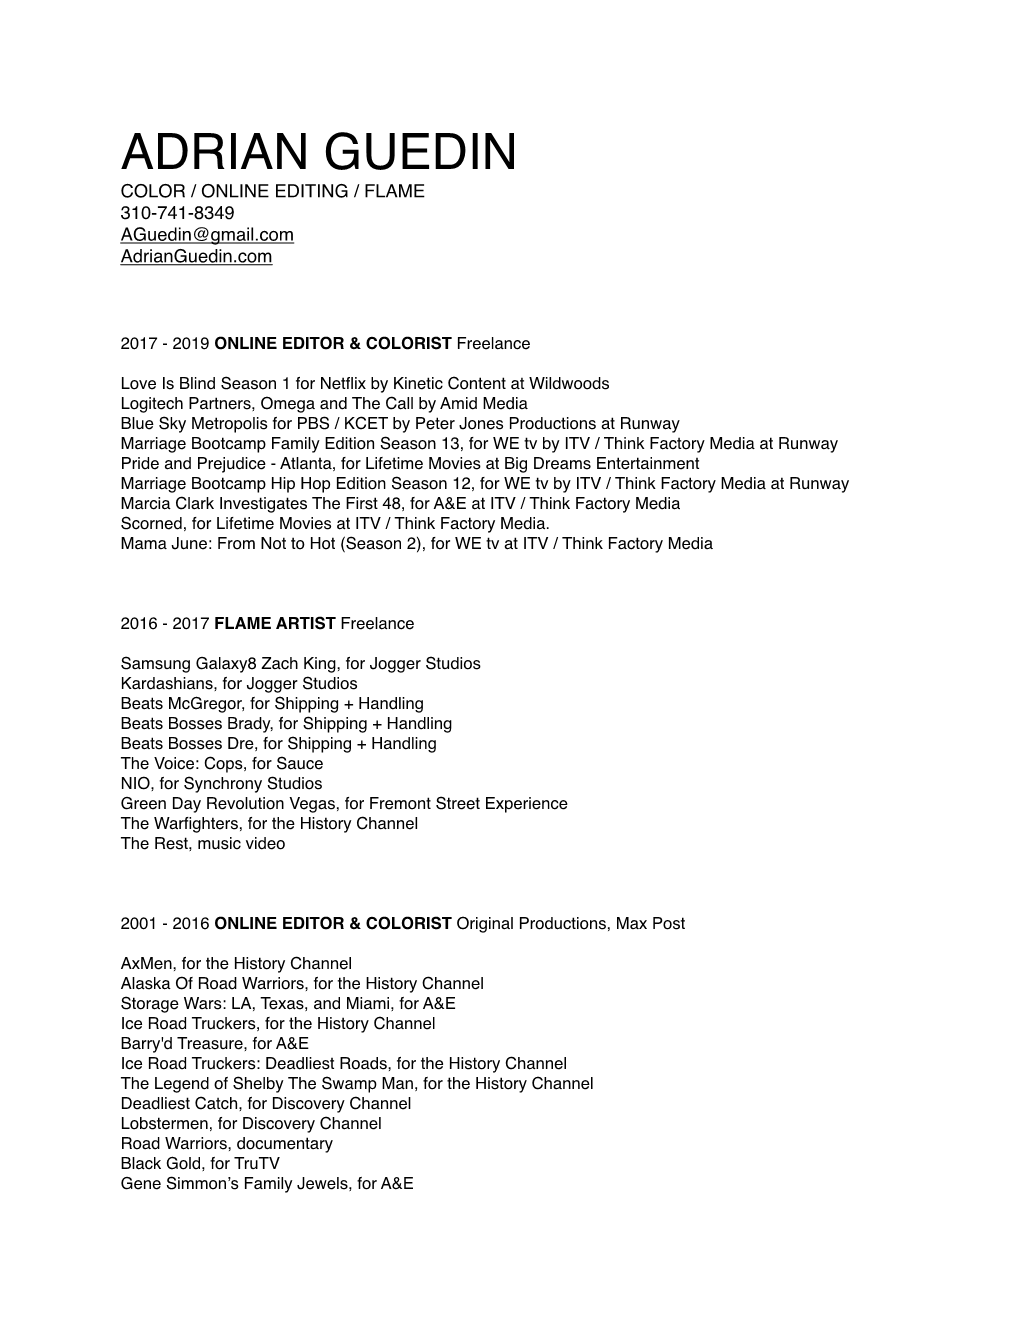 Adrian Guedin Resume 10 23 19 Full